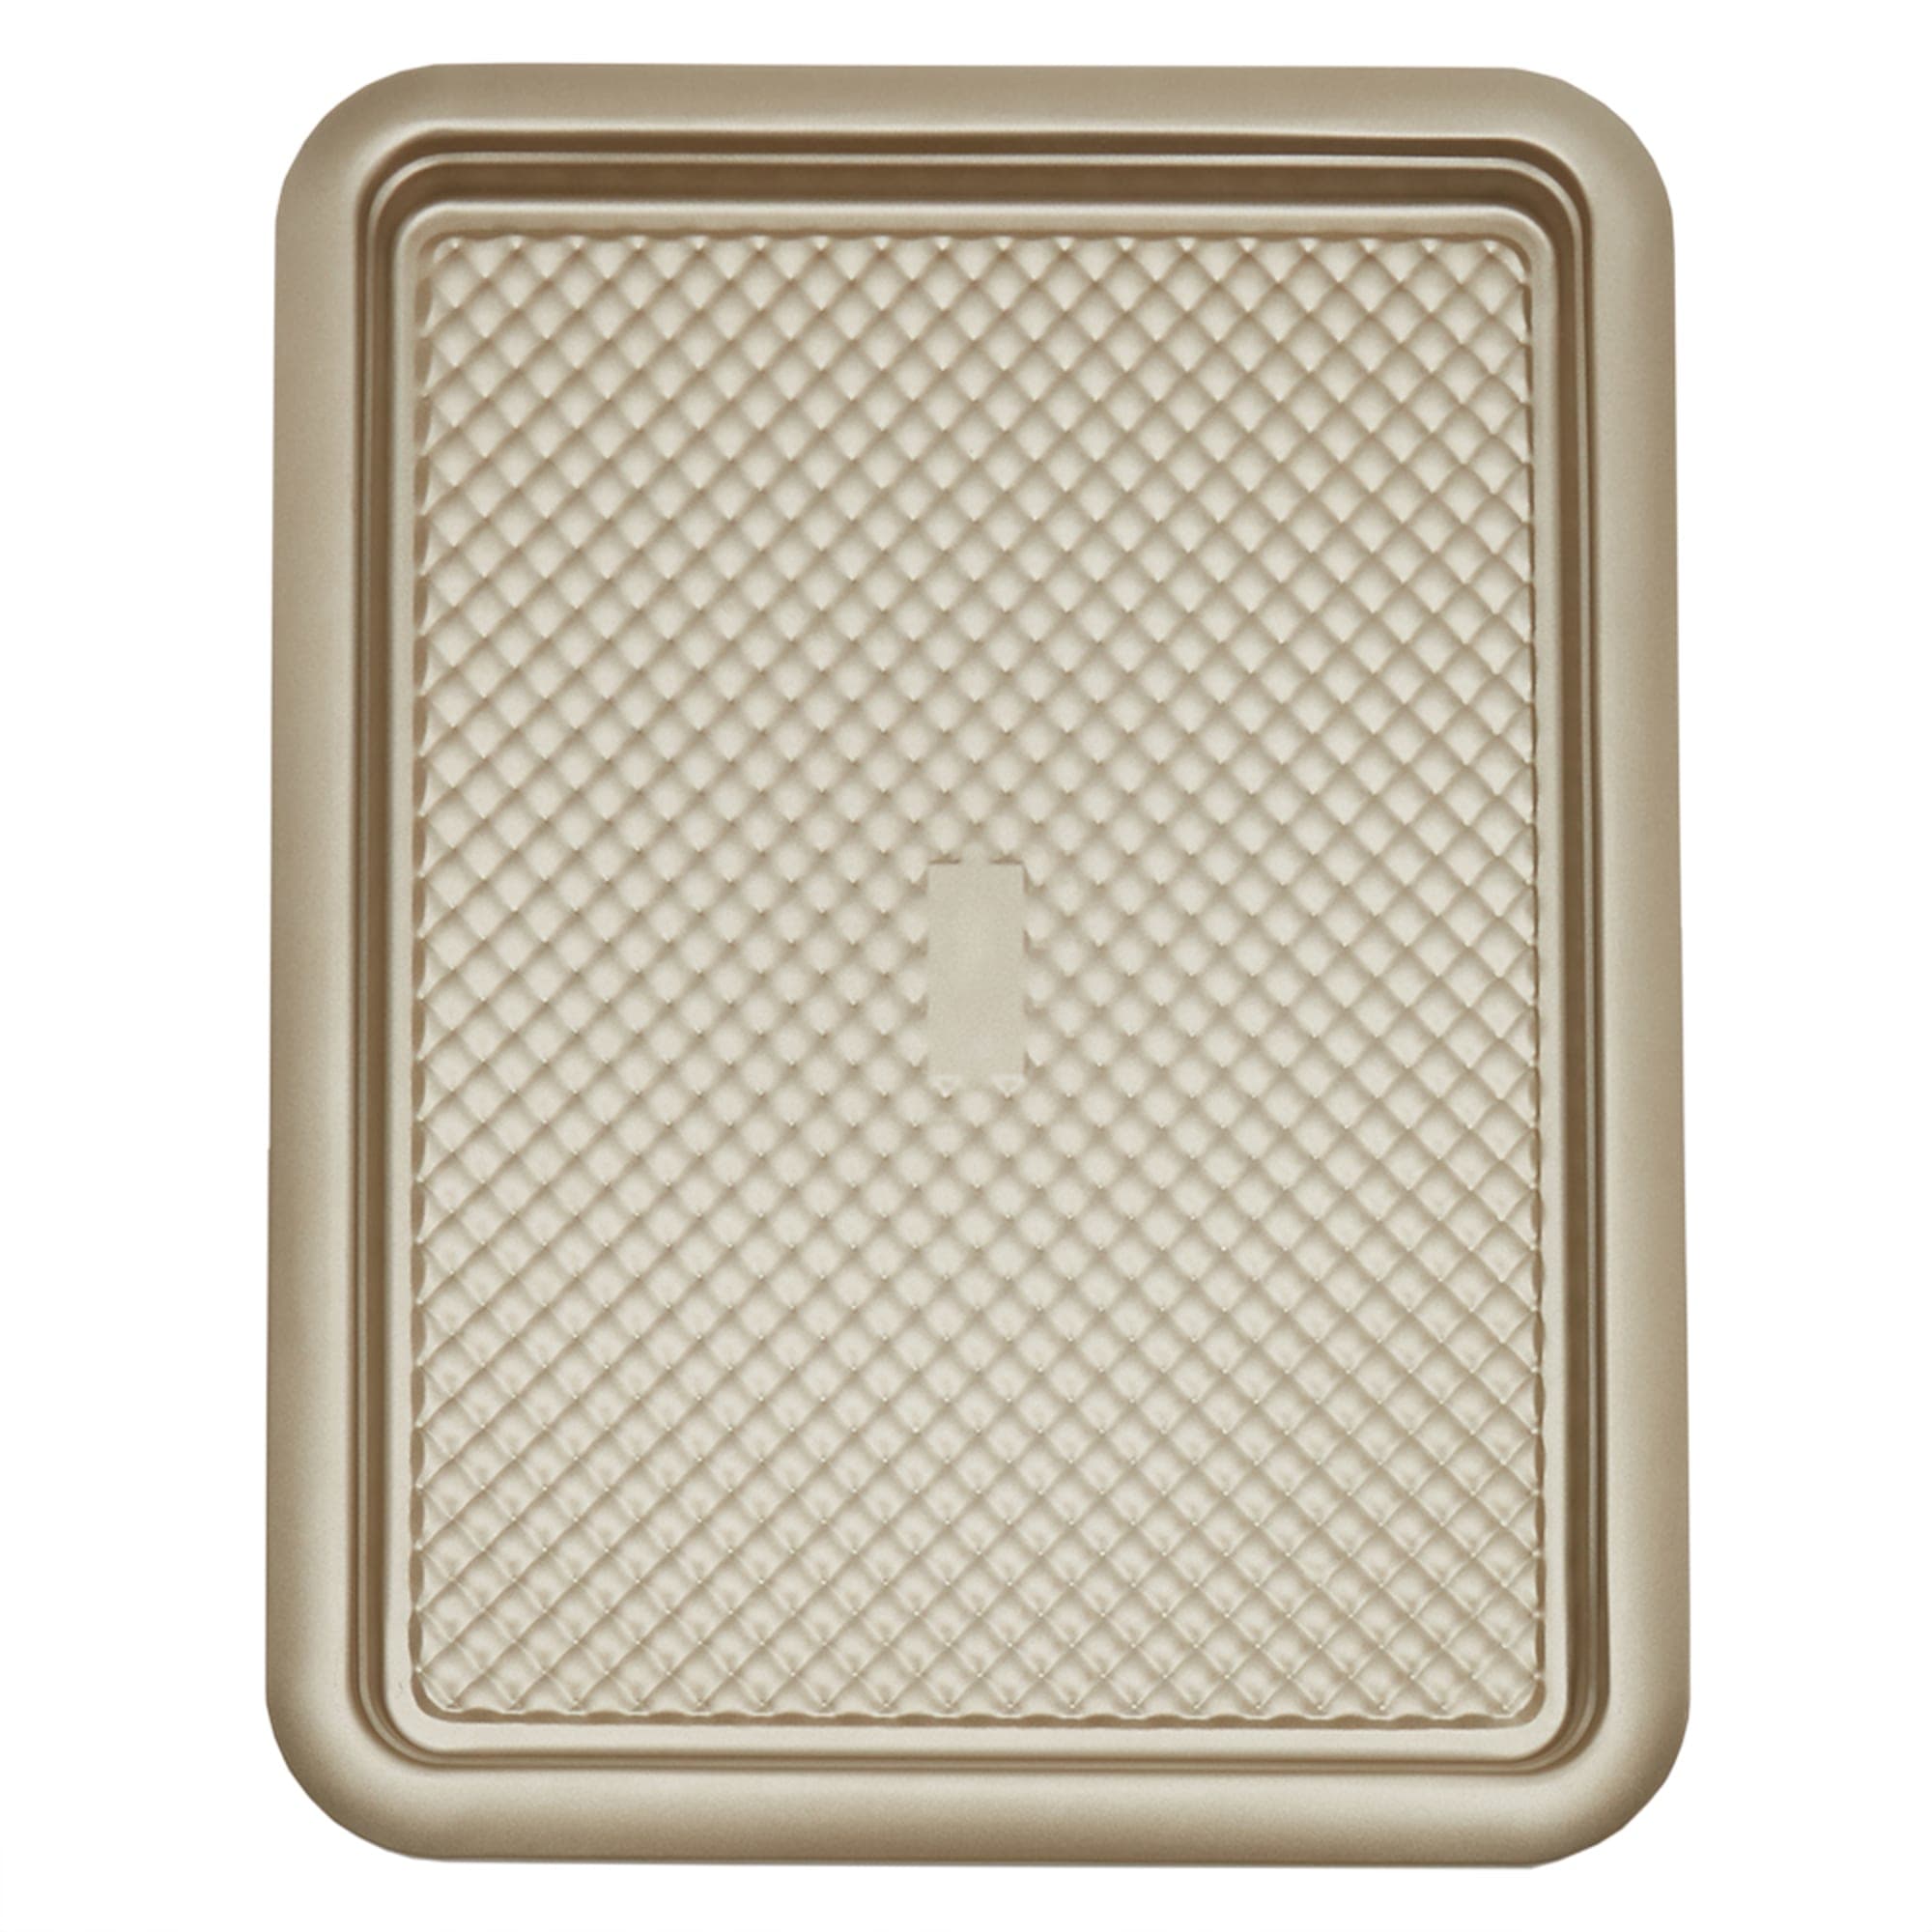 Home Basics Aurelia Non-Stick 12.6” x 16” Carbon Steel Cookie Sheet, Gold $6 EACH, CASE PACK OF 12